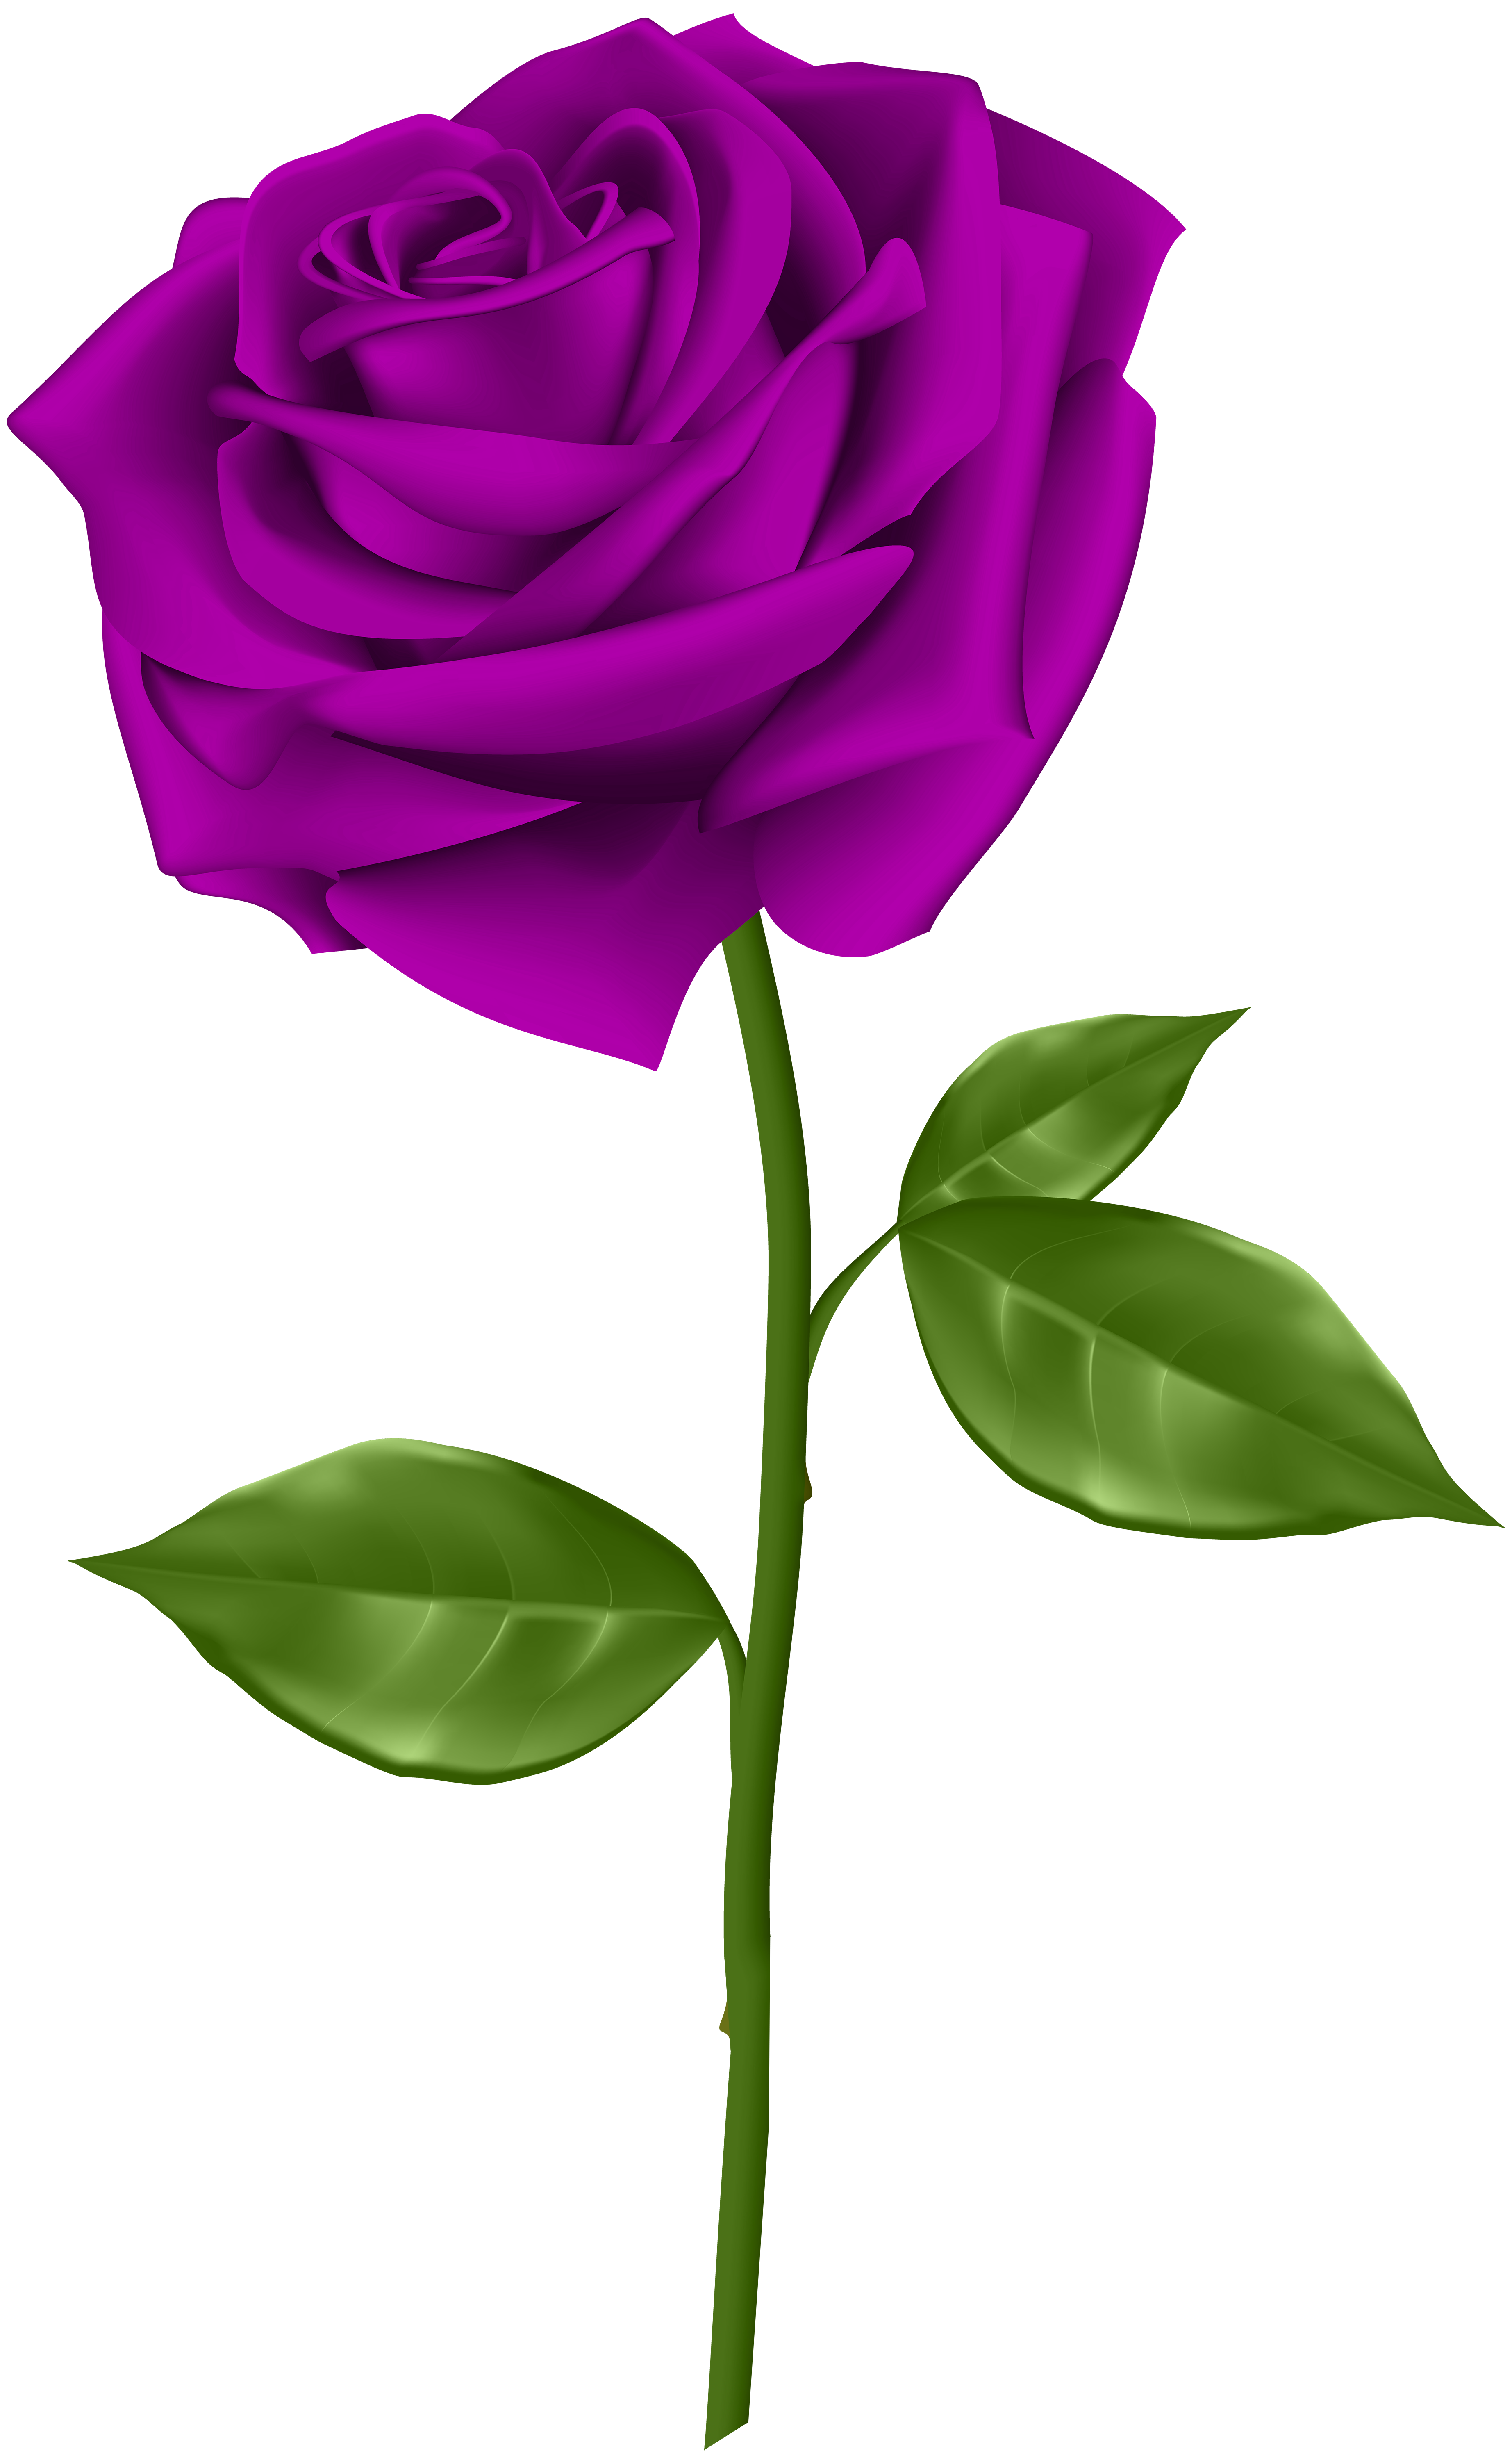 rose clipart purple